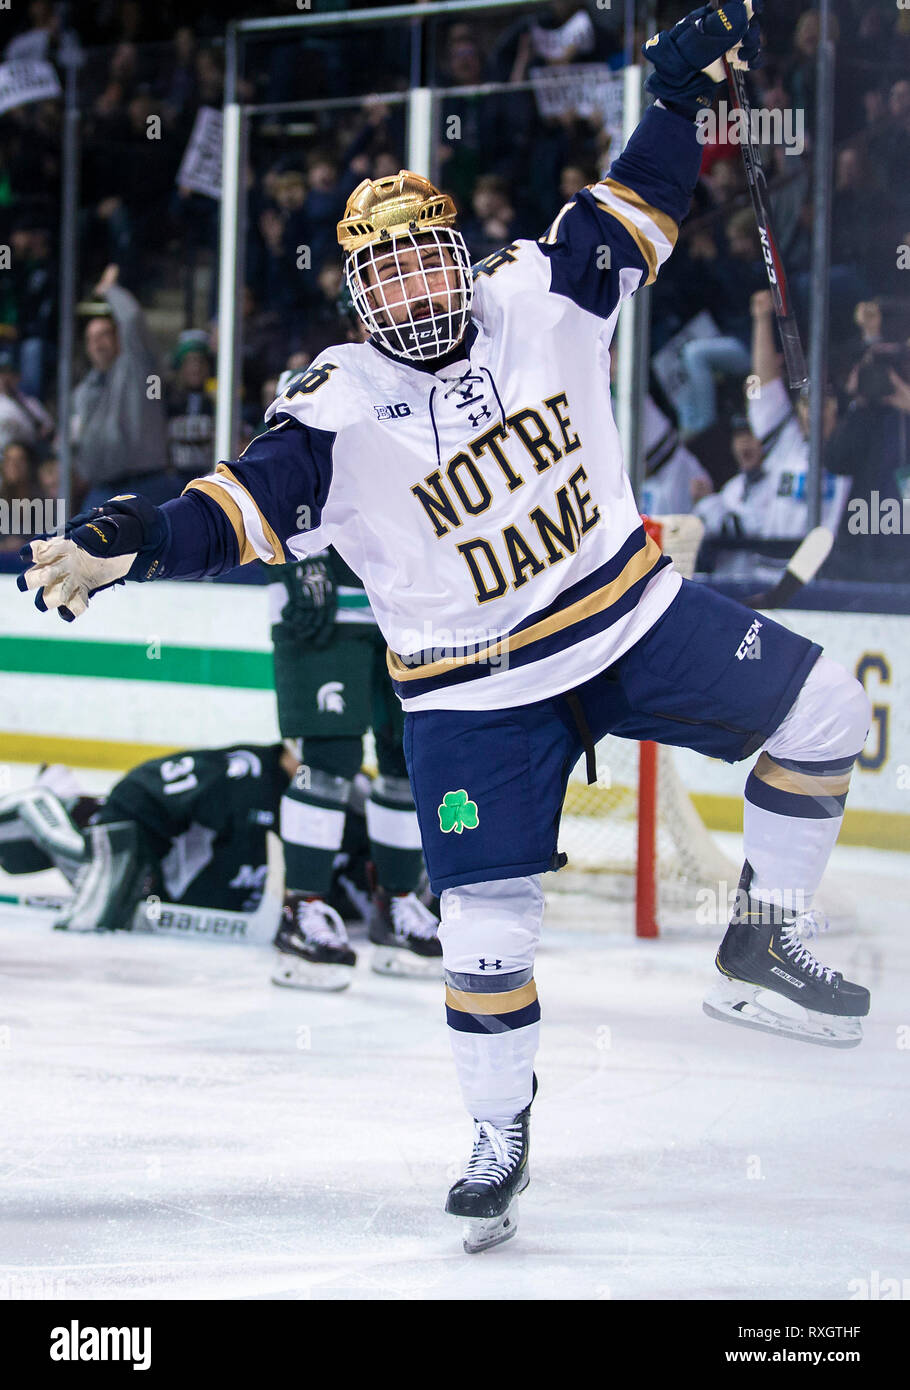 Notre Dame college hockey preview: Fighting Irish vs. Michigan State